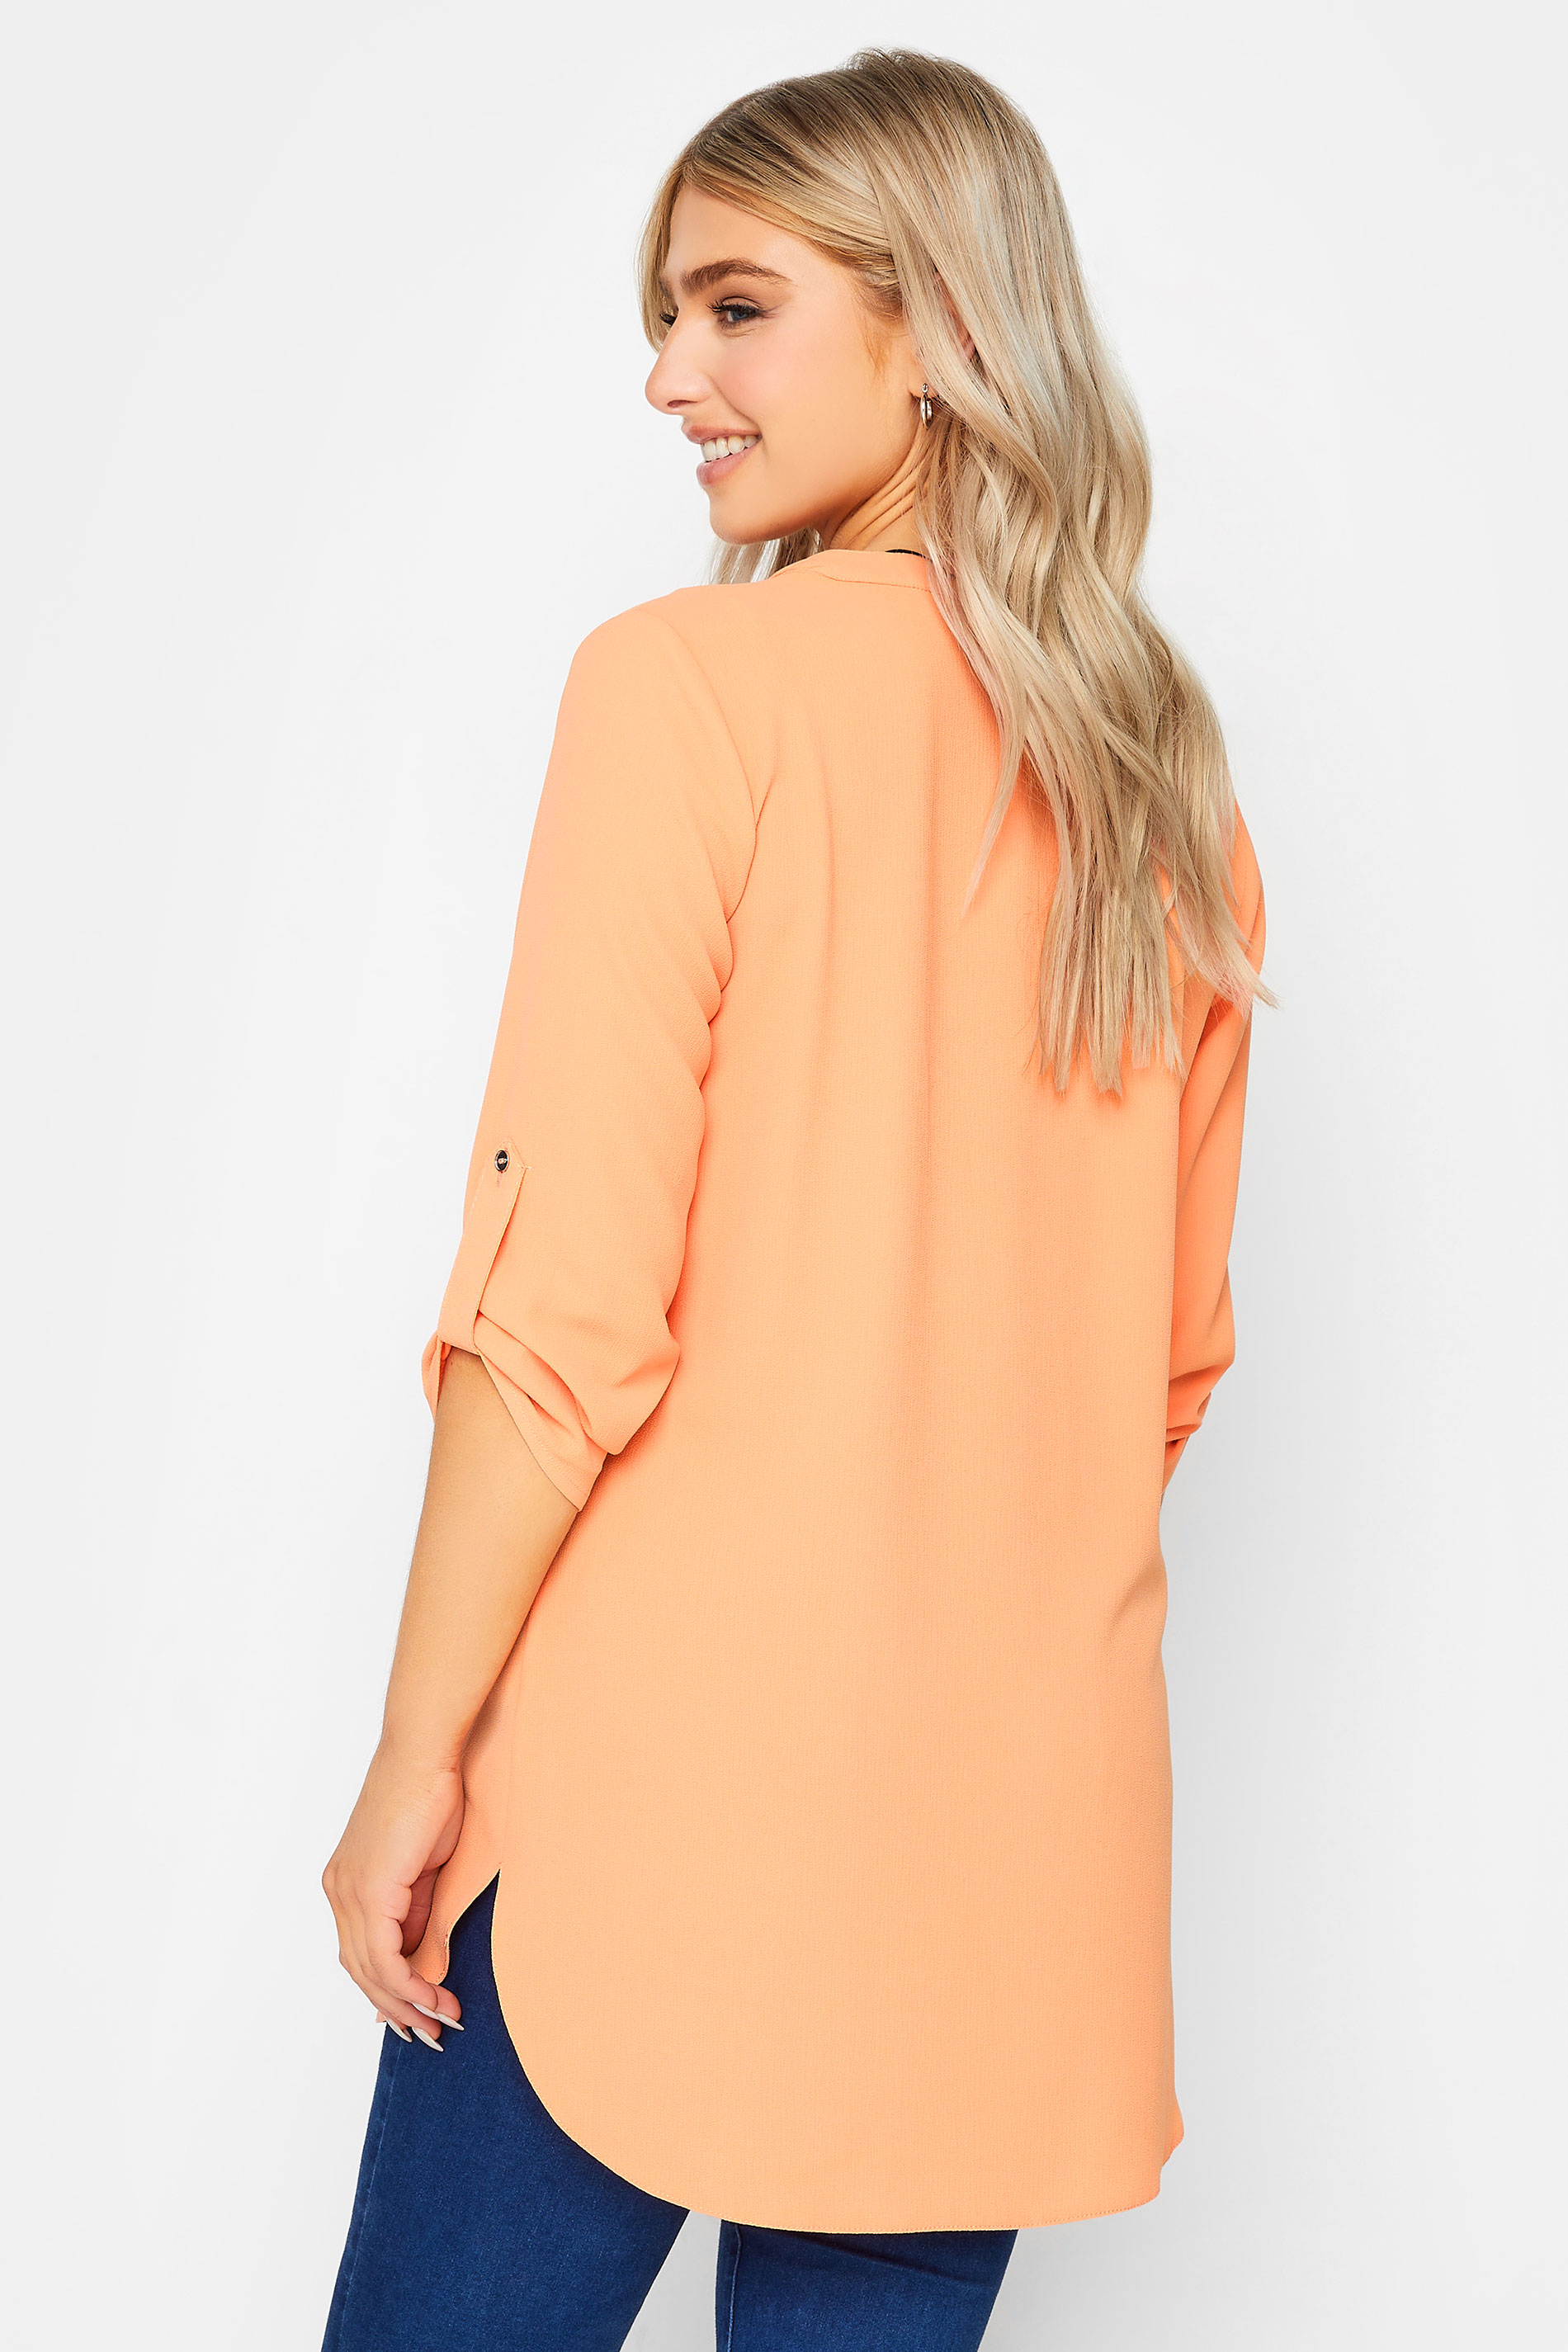 M&Co Light Orange Statement Button Tab Sleeve Shirt | M&Co 3